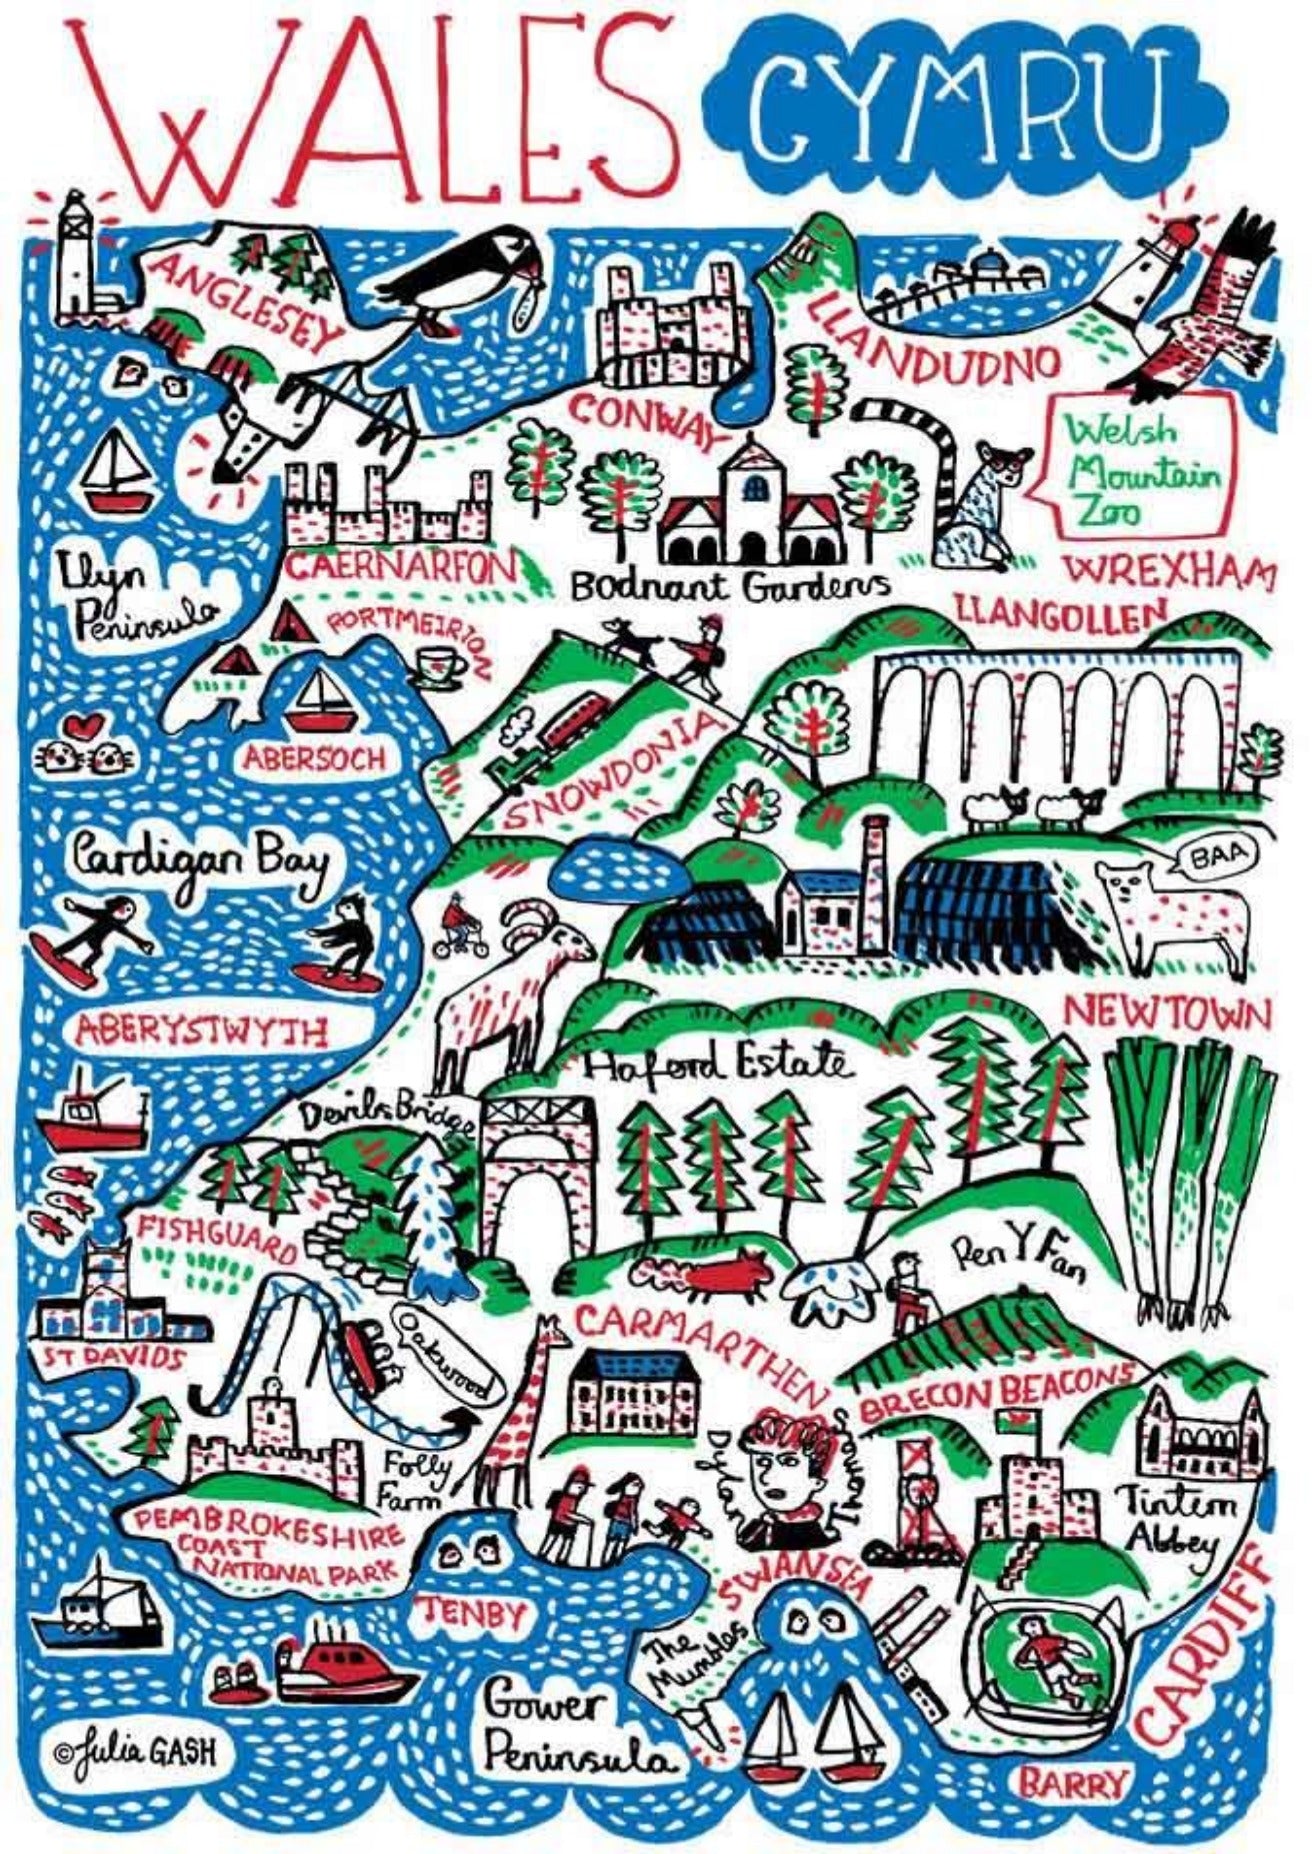 Wales - Cymru Map Illustration Art Print featuring Cardiff, Brecon Beacons, Snowdonia by Julia Gash